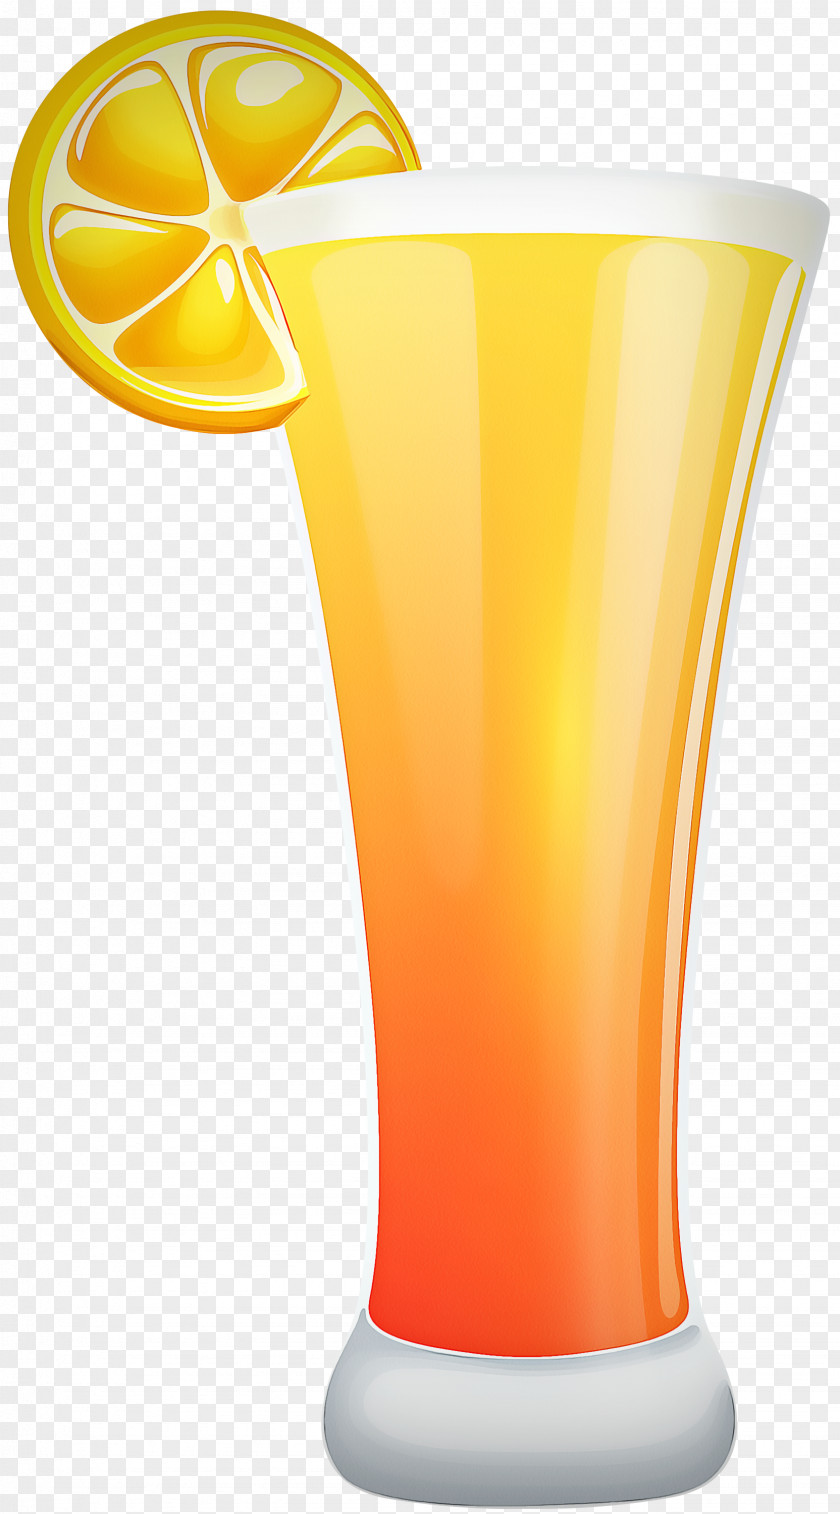 Orange Juice Cocktail Garnish Drink Non-alcoholic Beverage Beer Glass Hurricane PNG